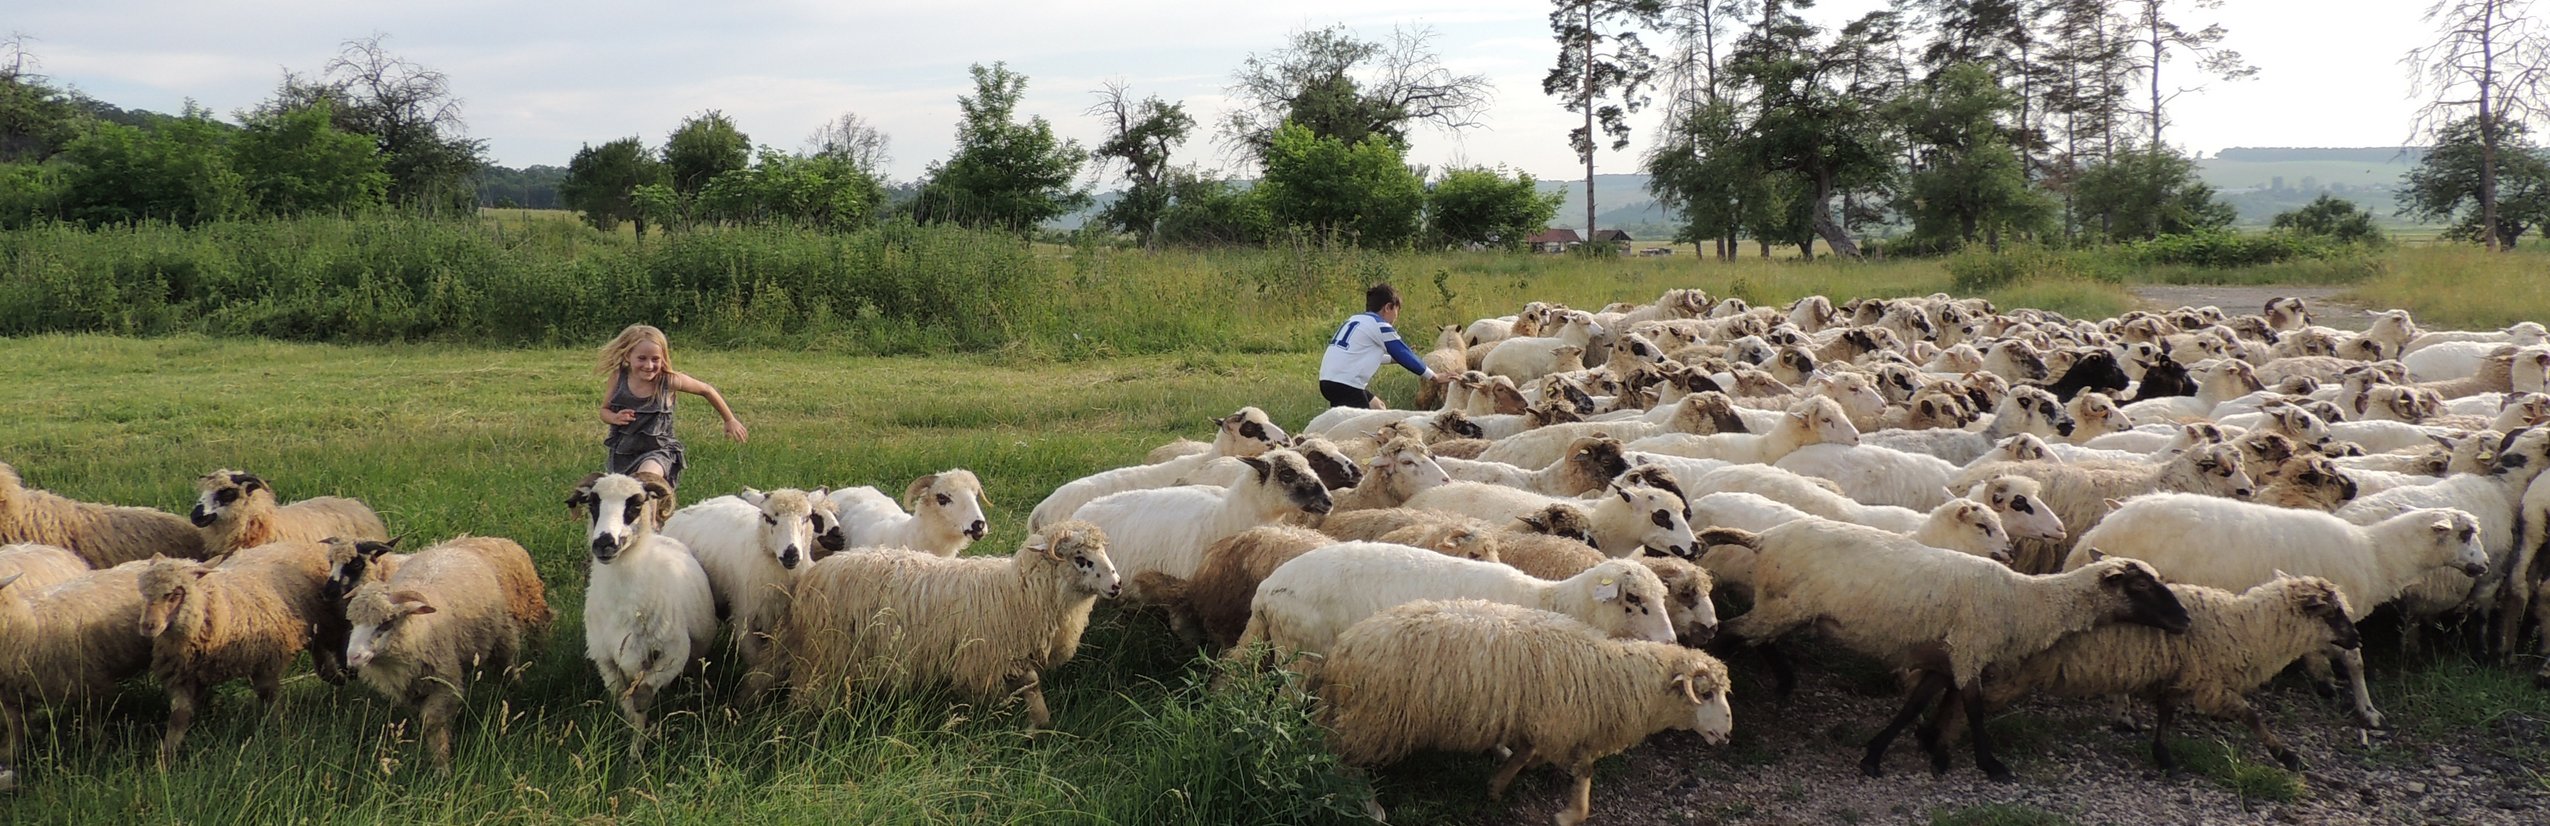 Rumänien mit Kindern - Landleben Rumänien - Schafsherde